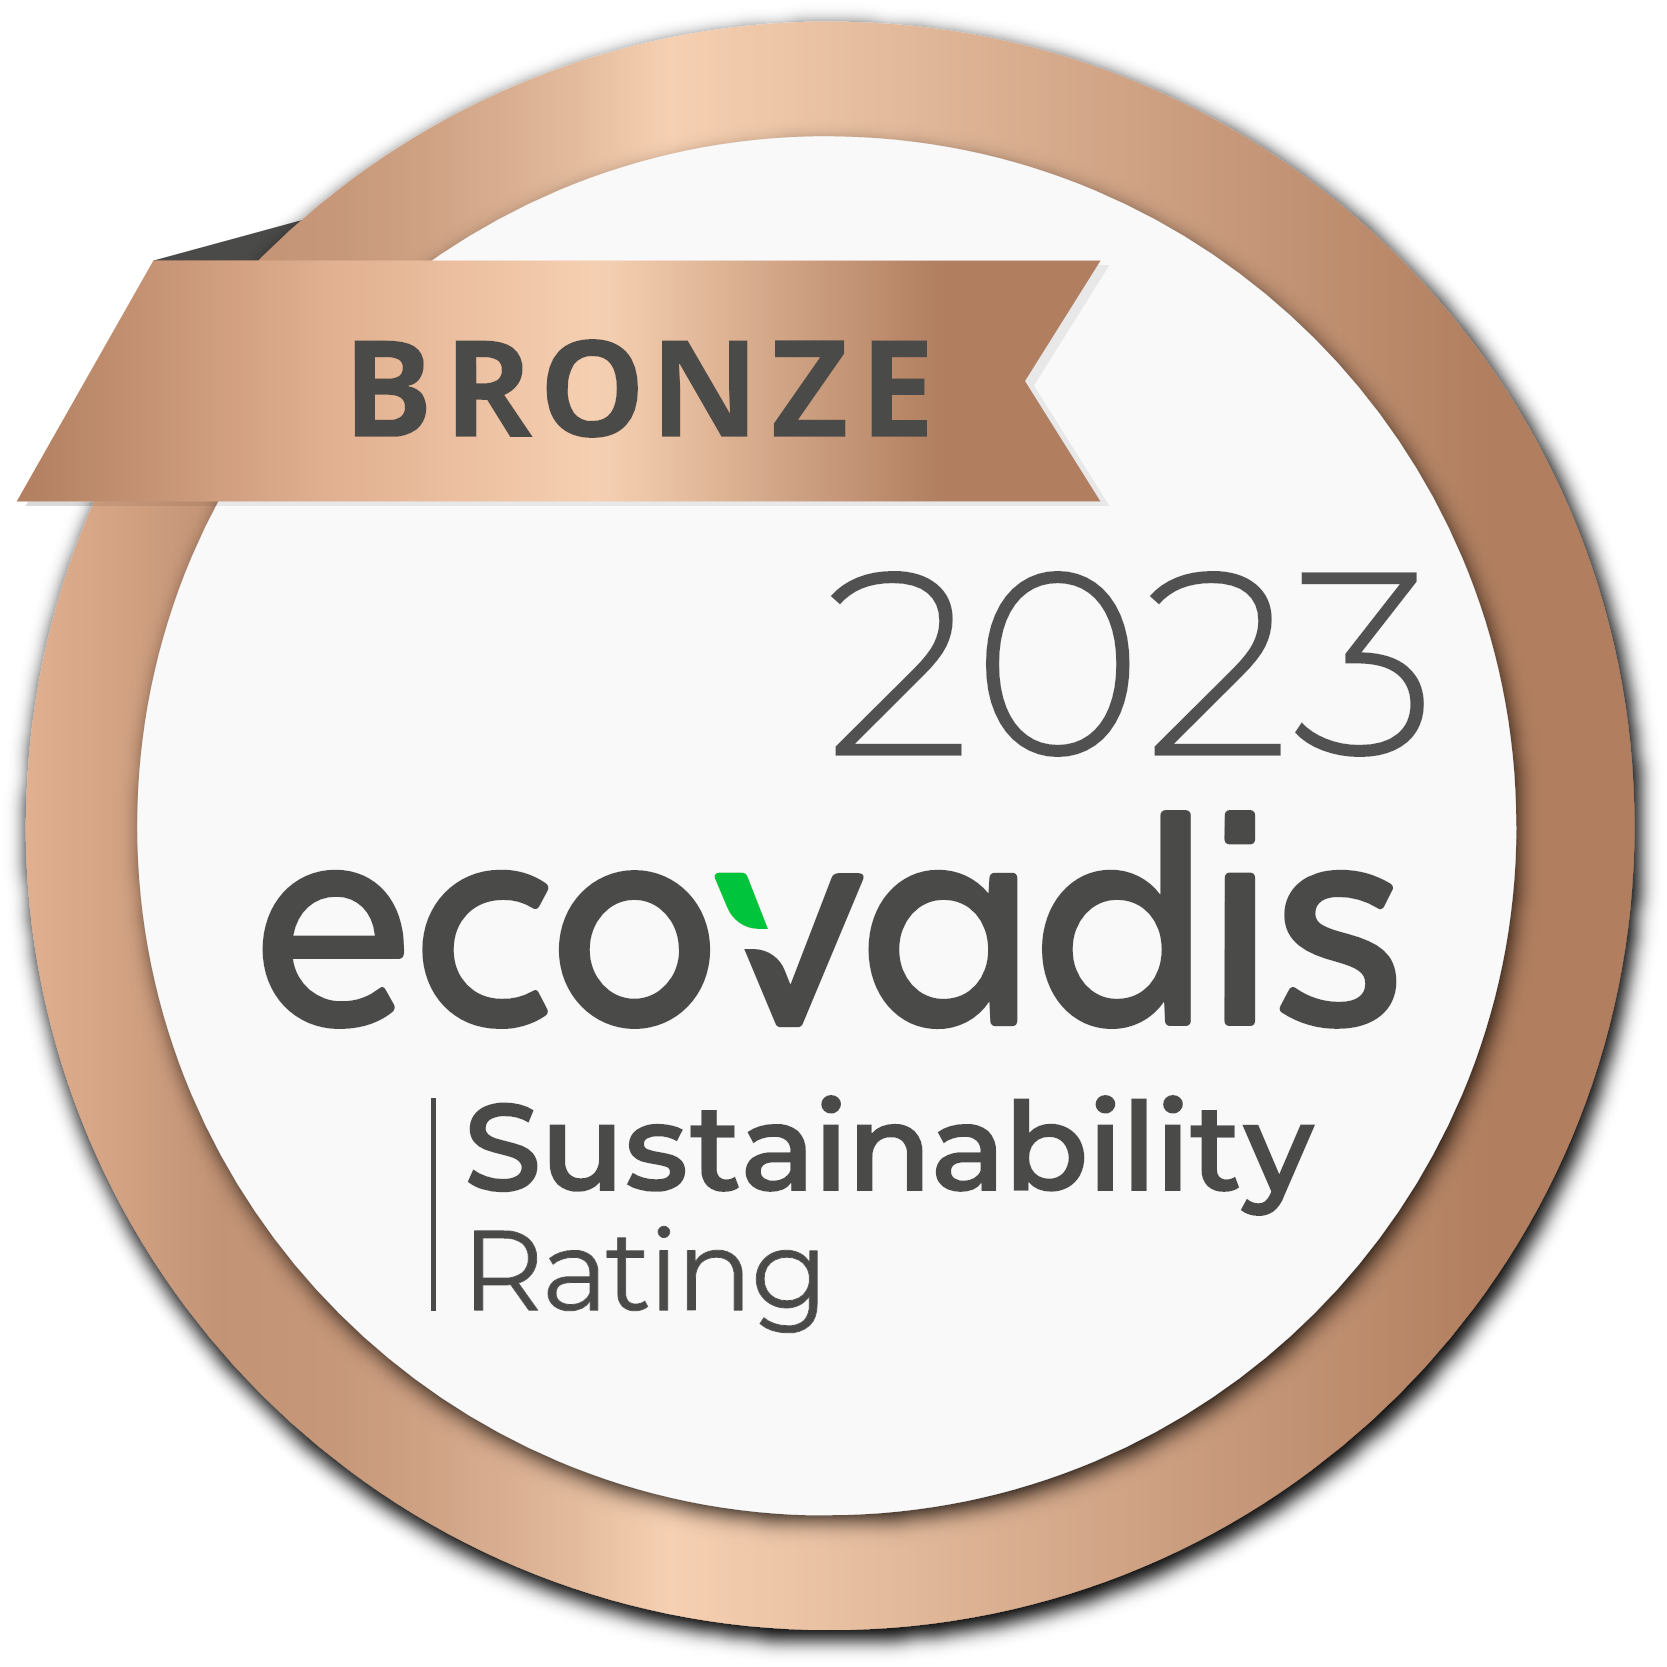 ecovadis bronze rating award